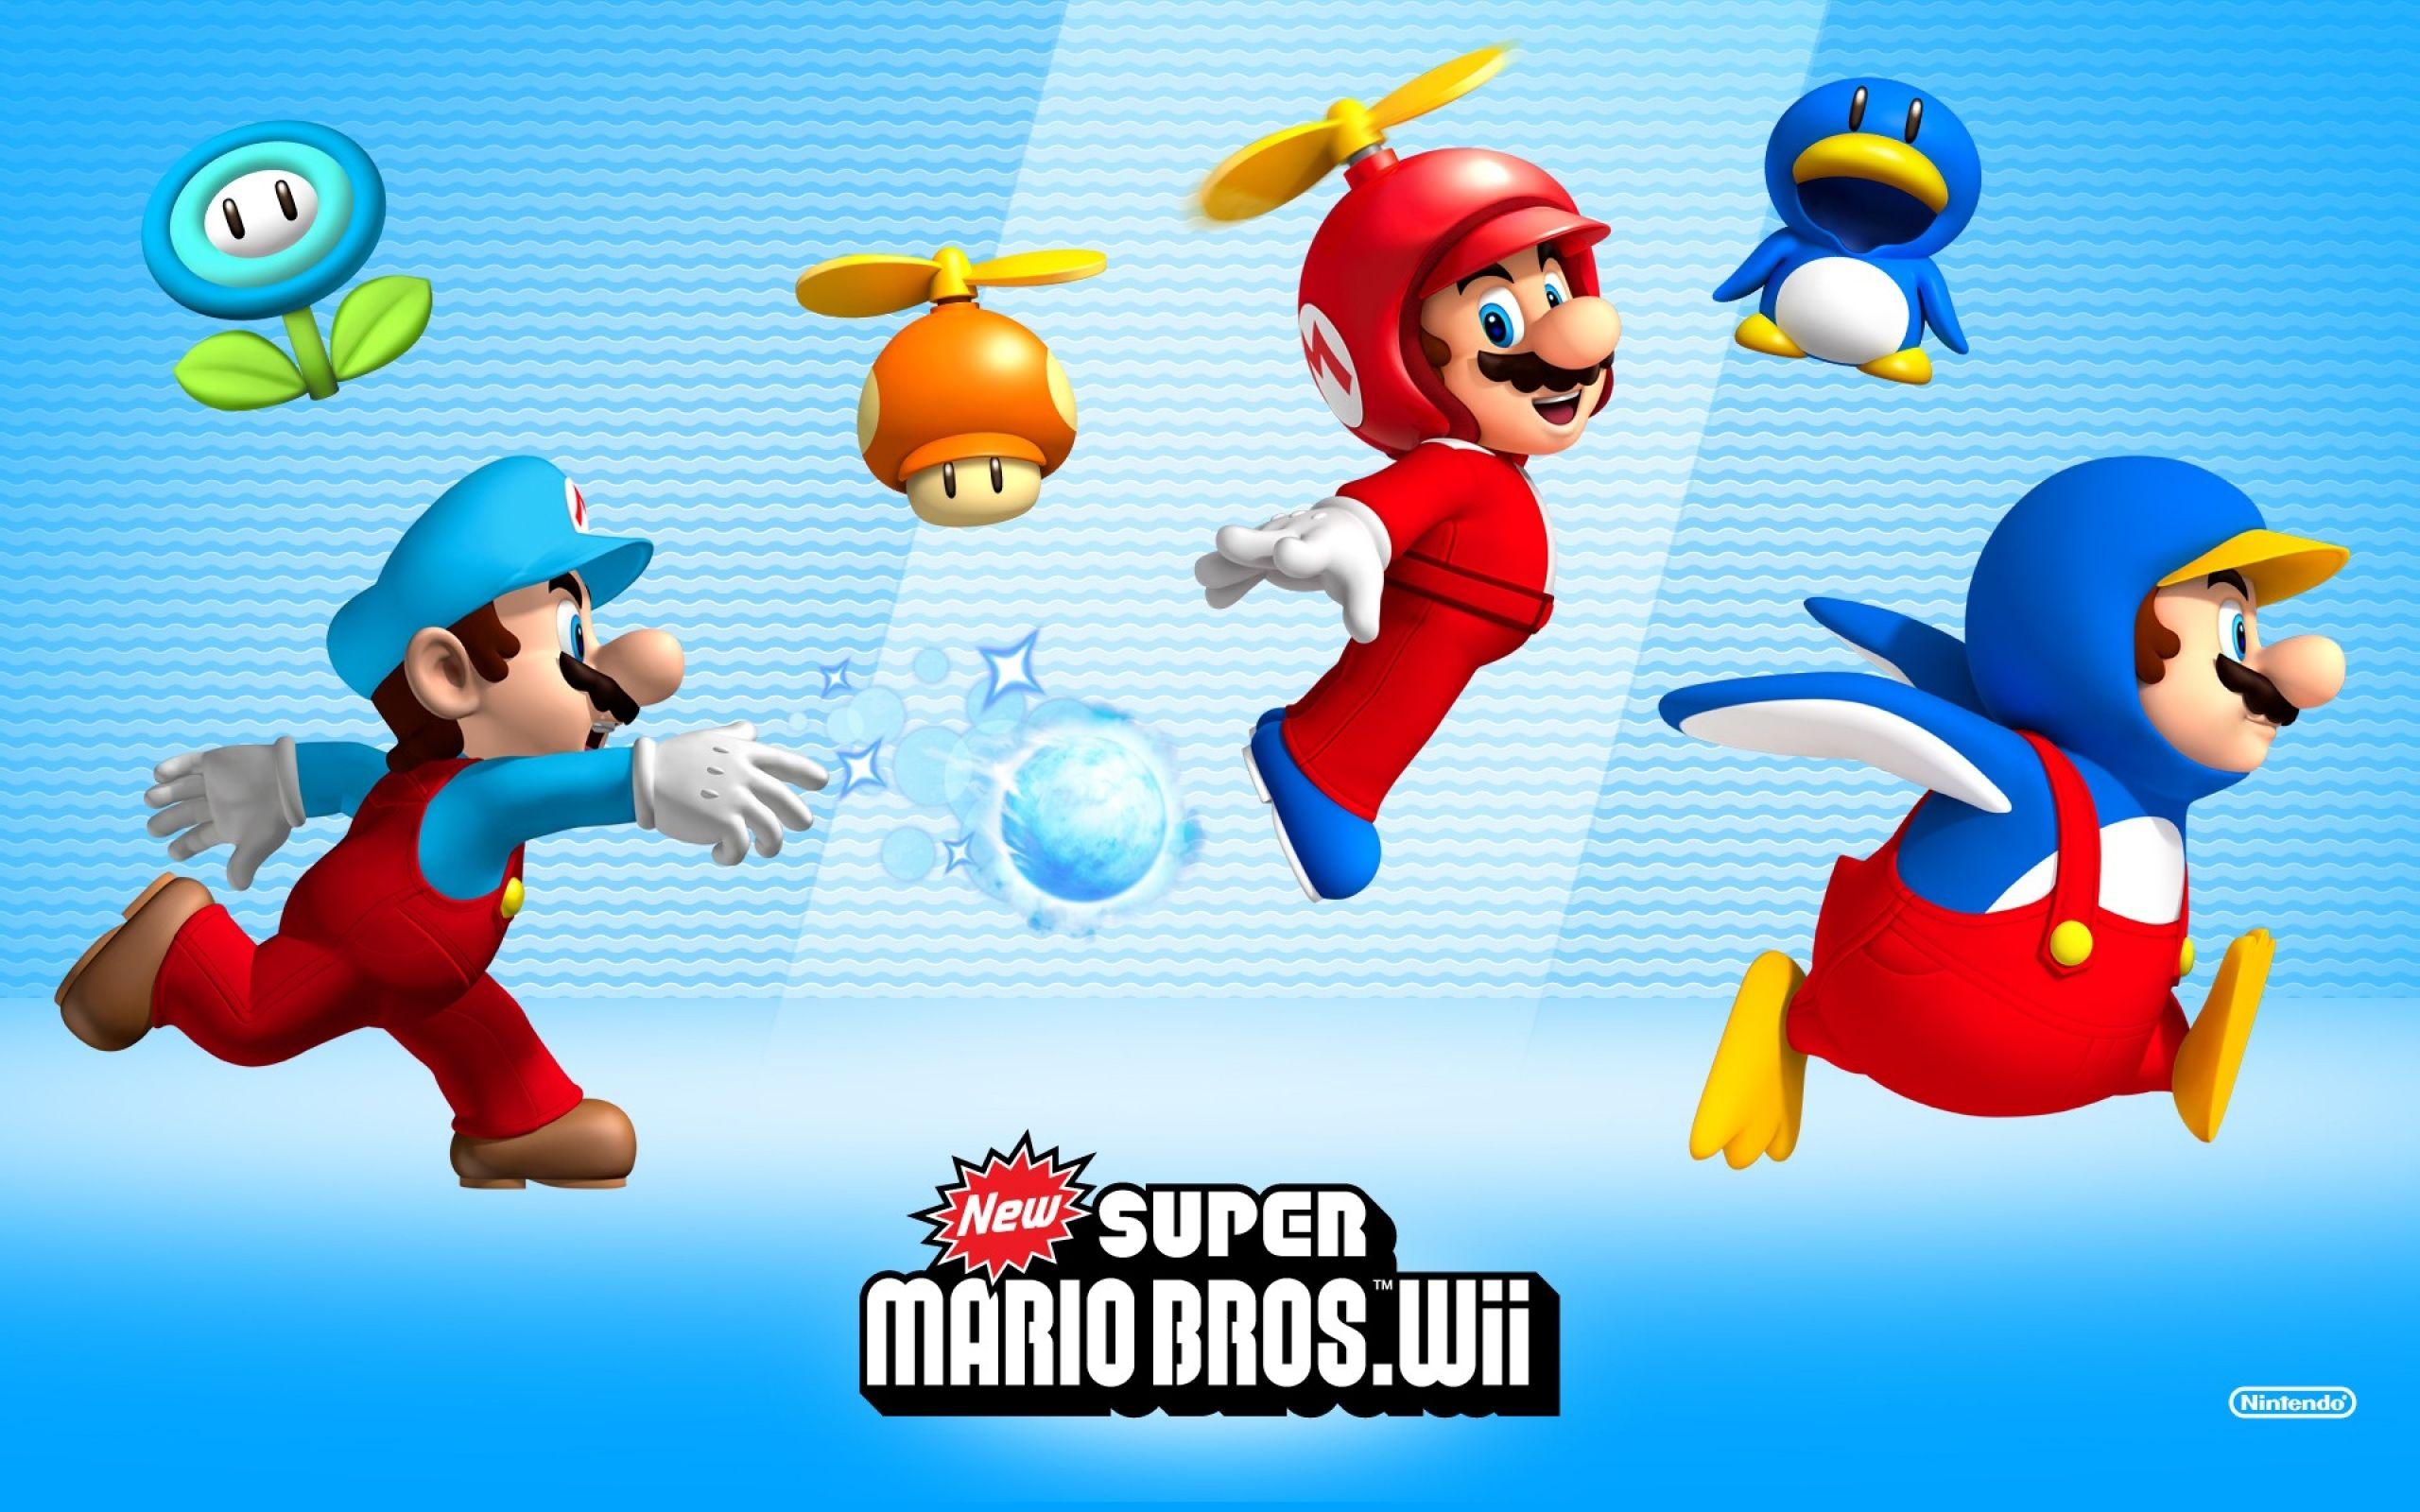 New Super Mario Bros. Wii wallpaper. New Super Mario Bros. Wii